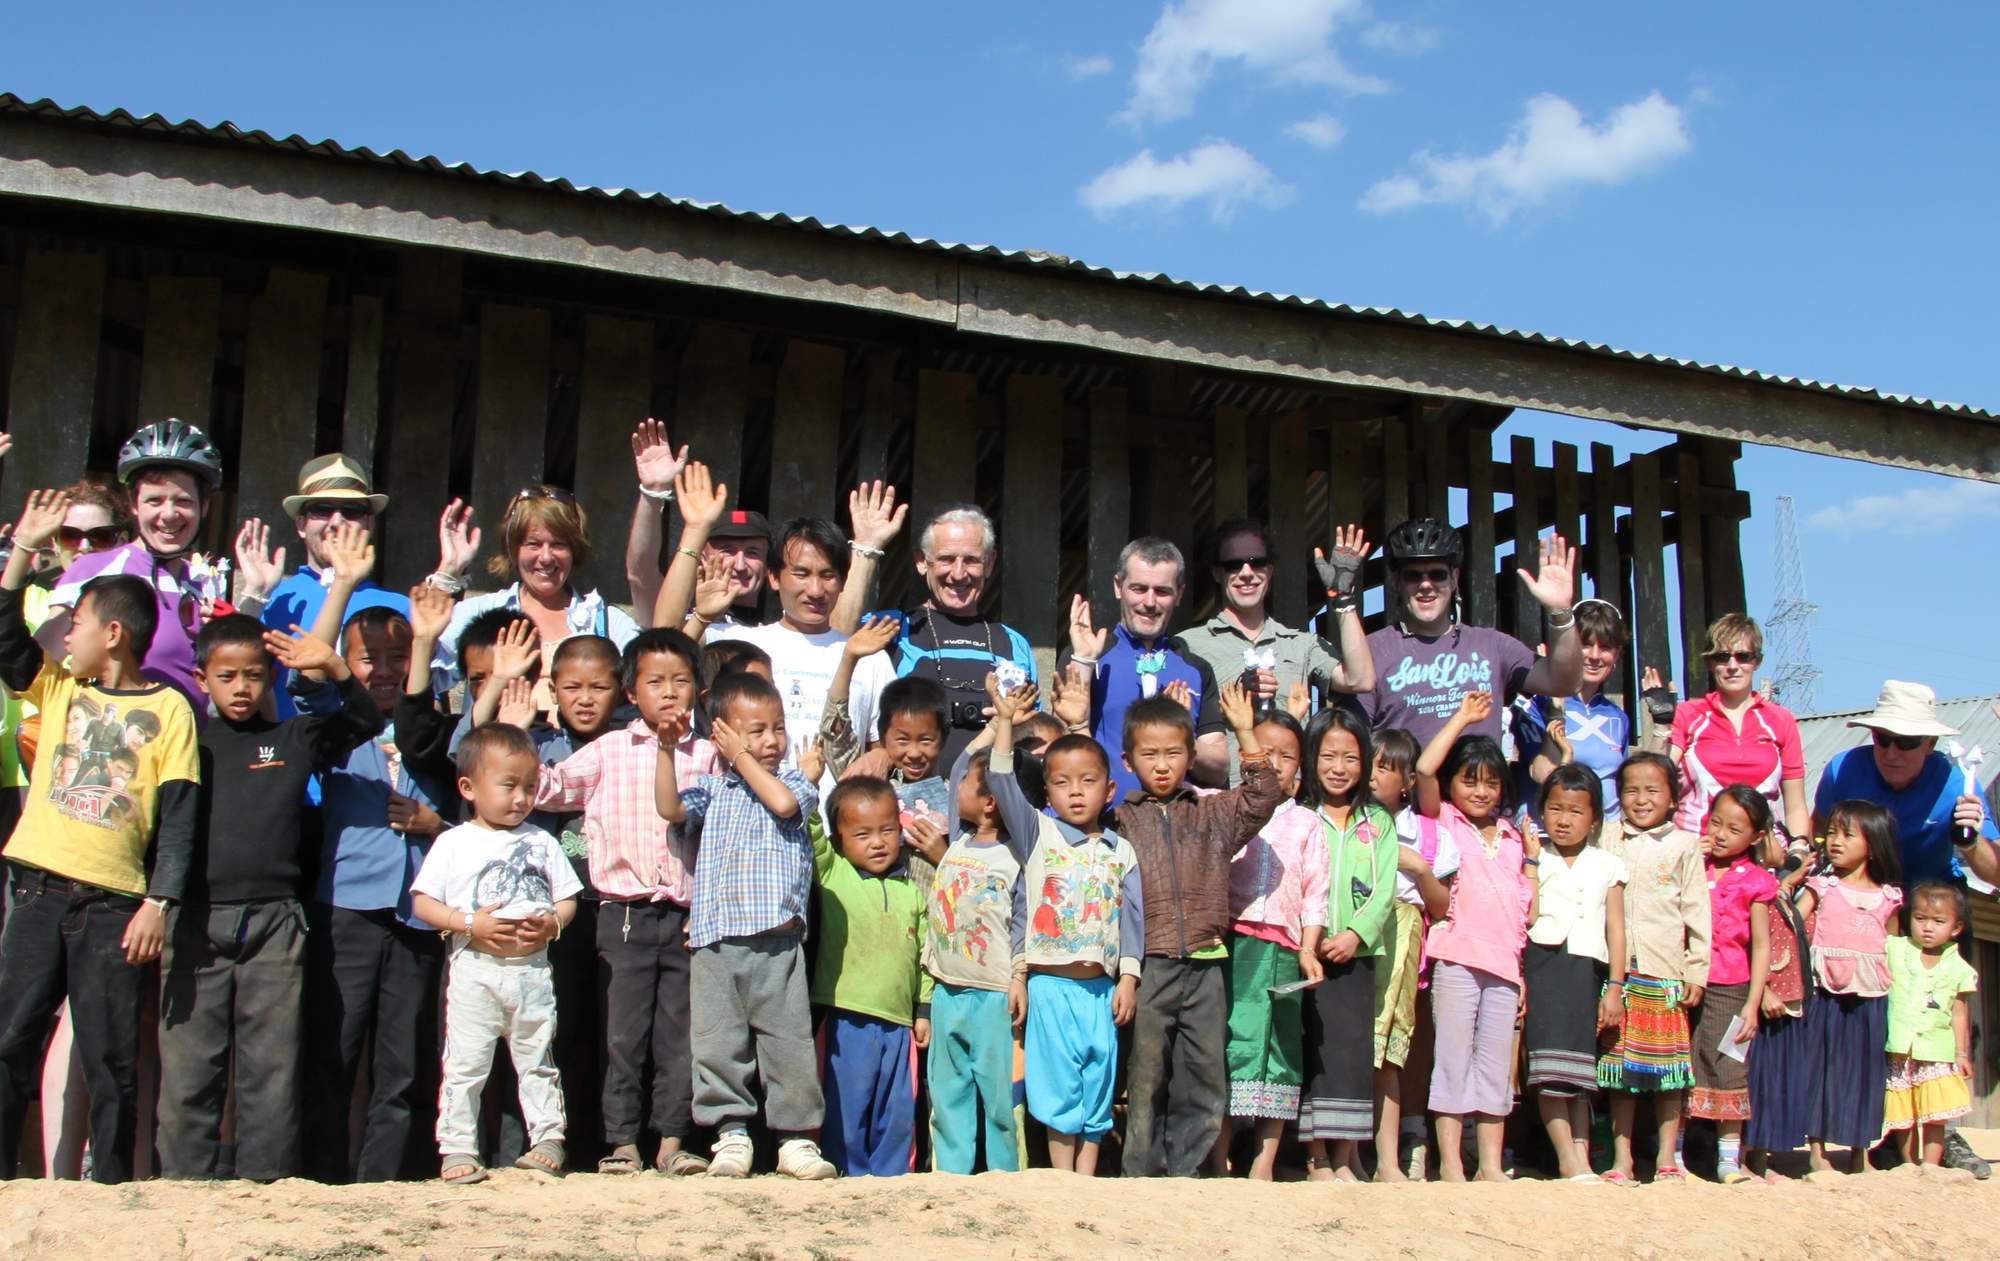 Hmong village school Laos 